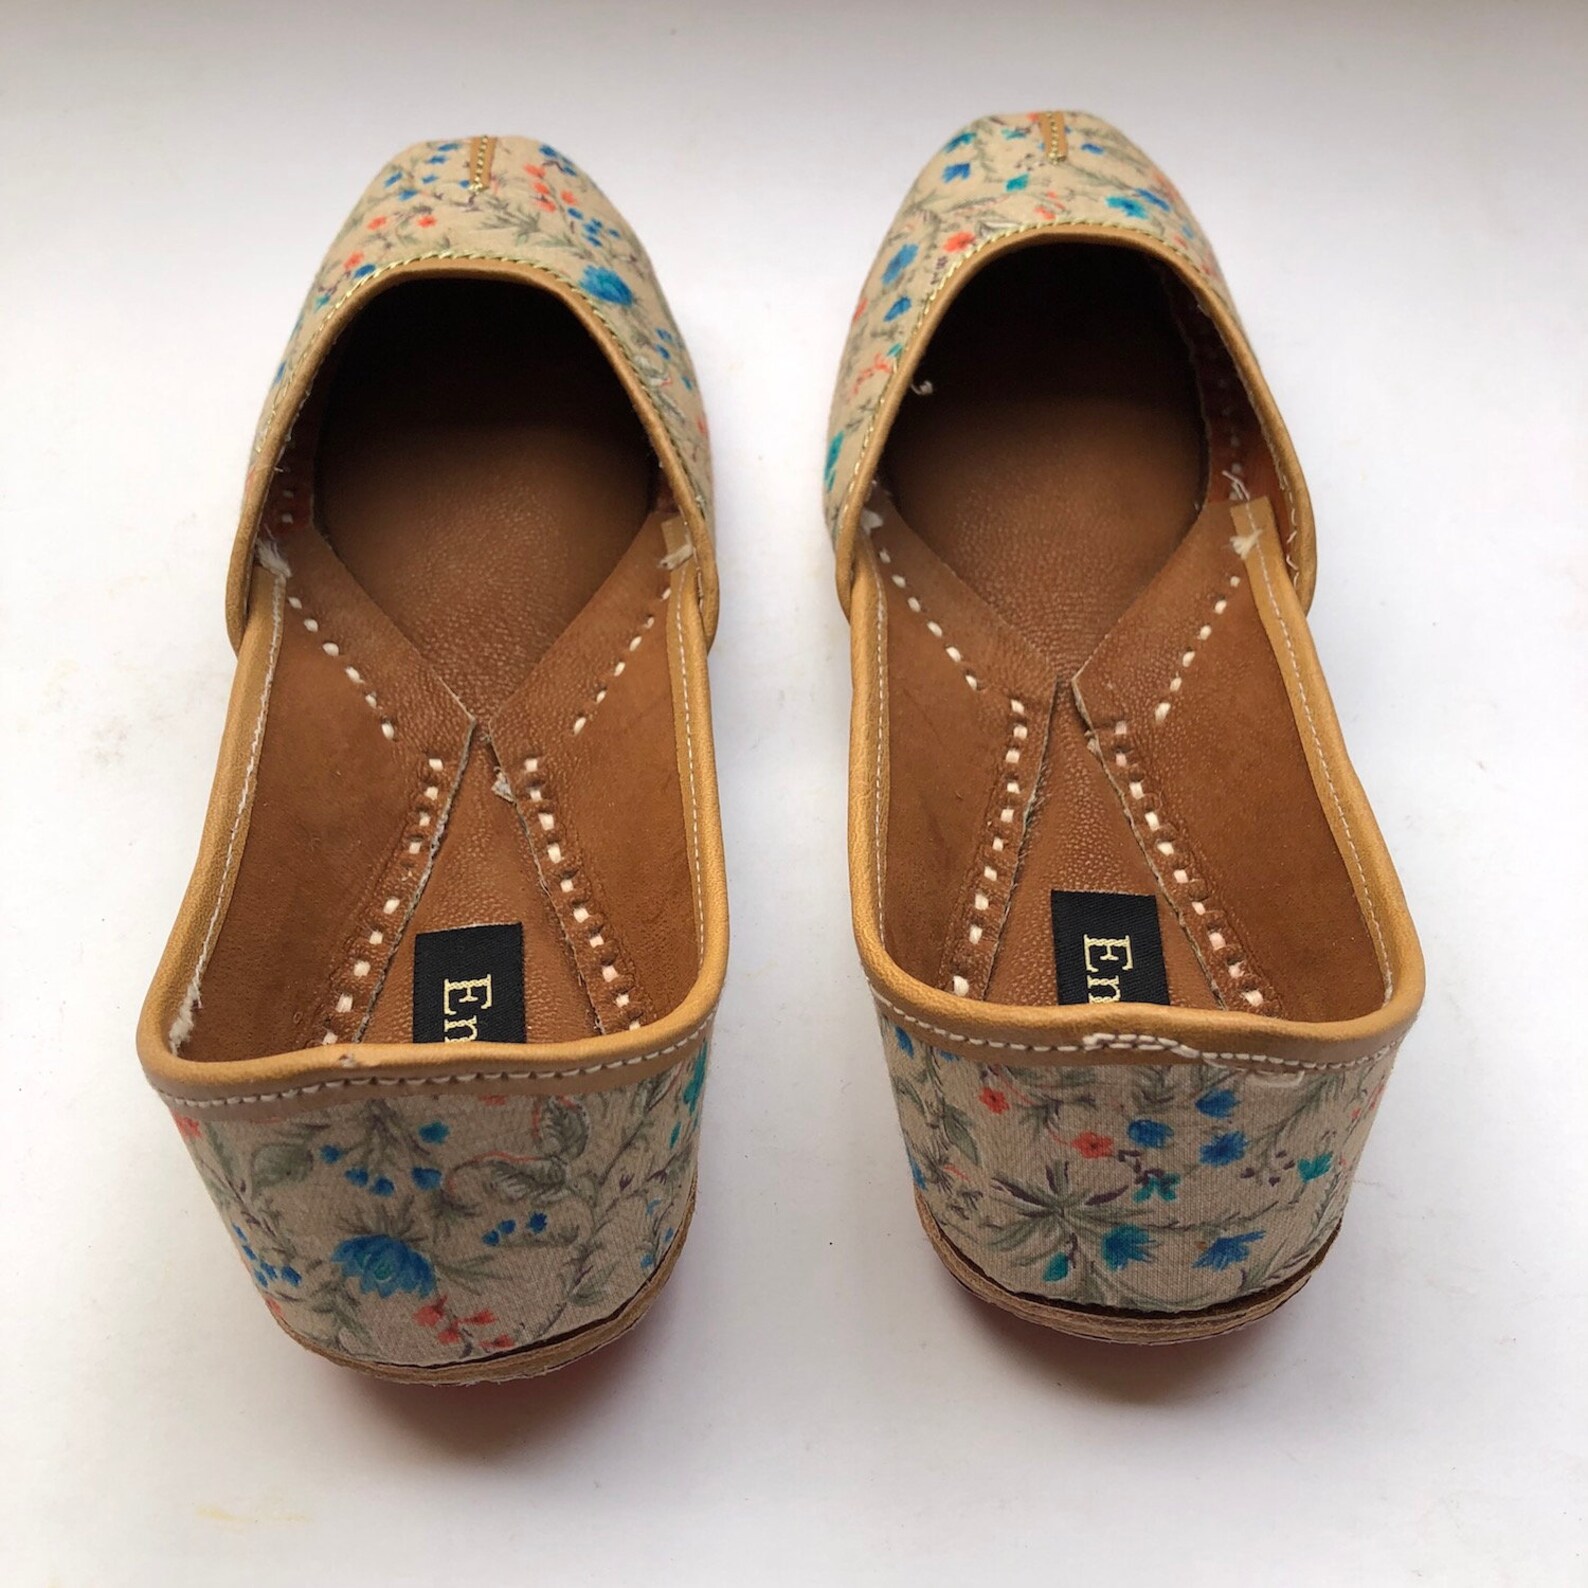 floral shoes for women, off white flat shoes, slip on shoes, indian shoes, ballet shoes, handmade designer shoes/juttis or mojar